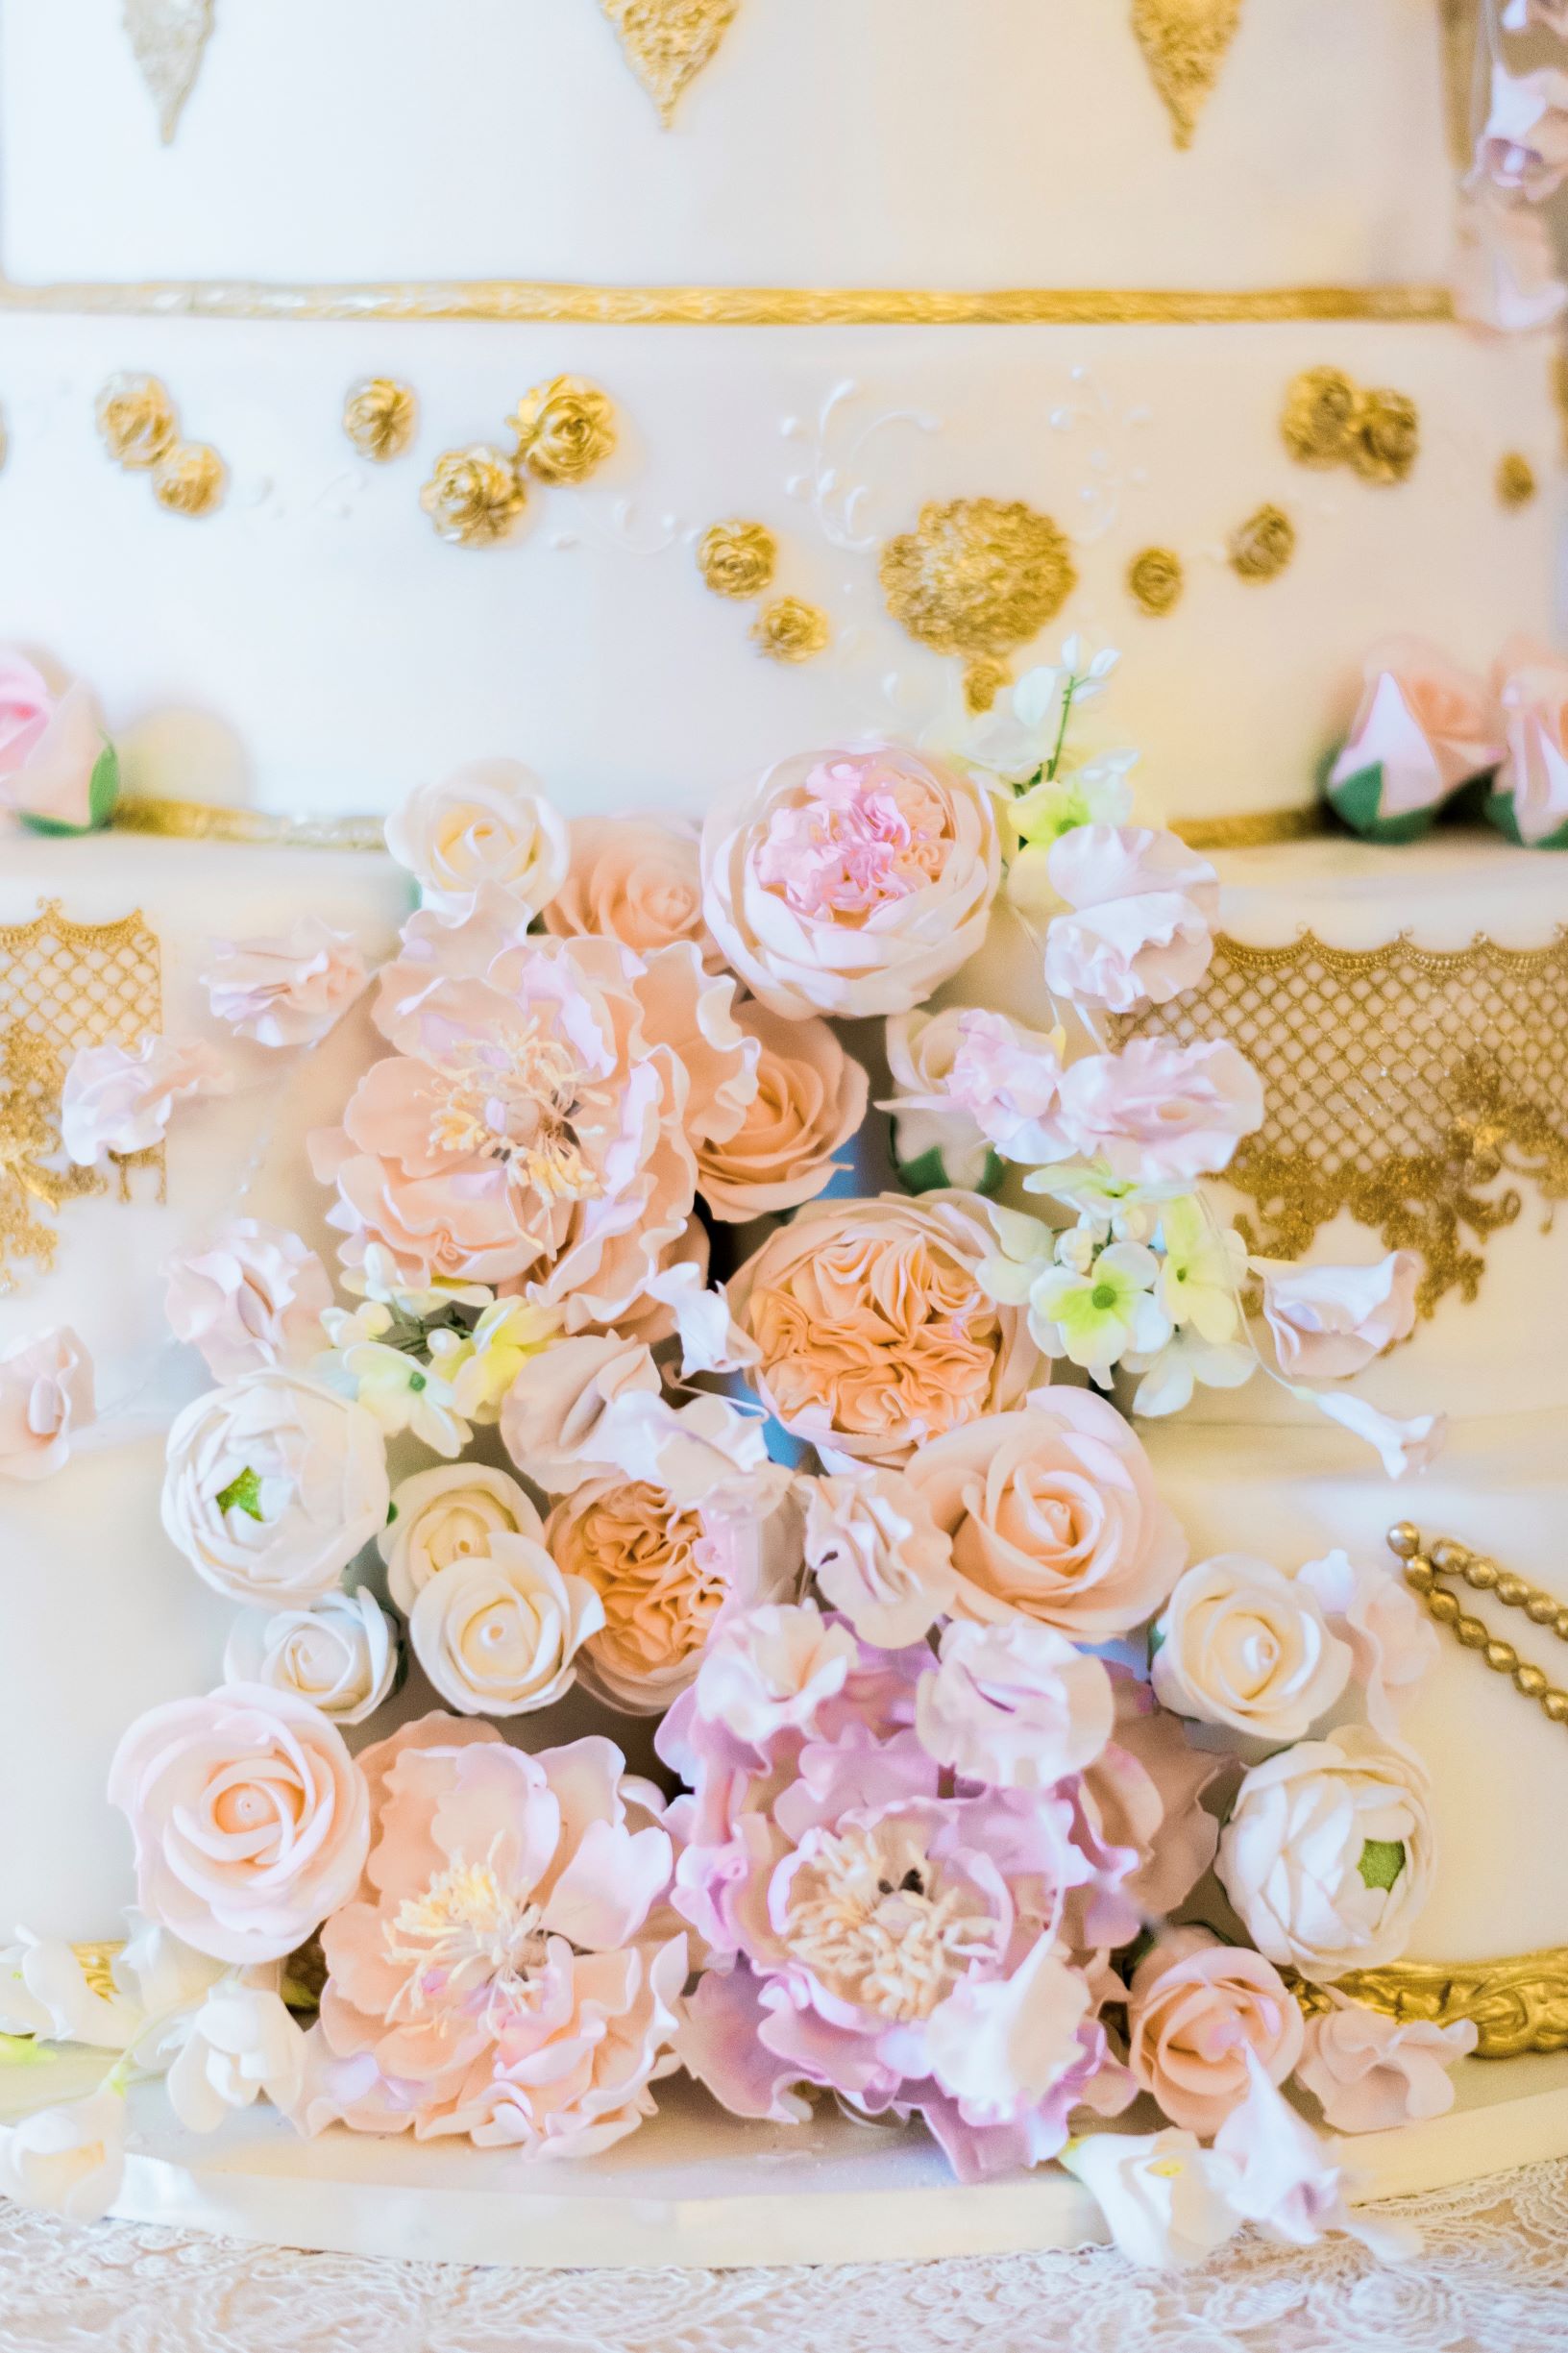 Handcrafted wedding cake flowers